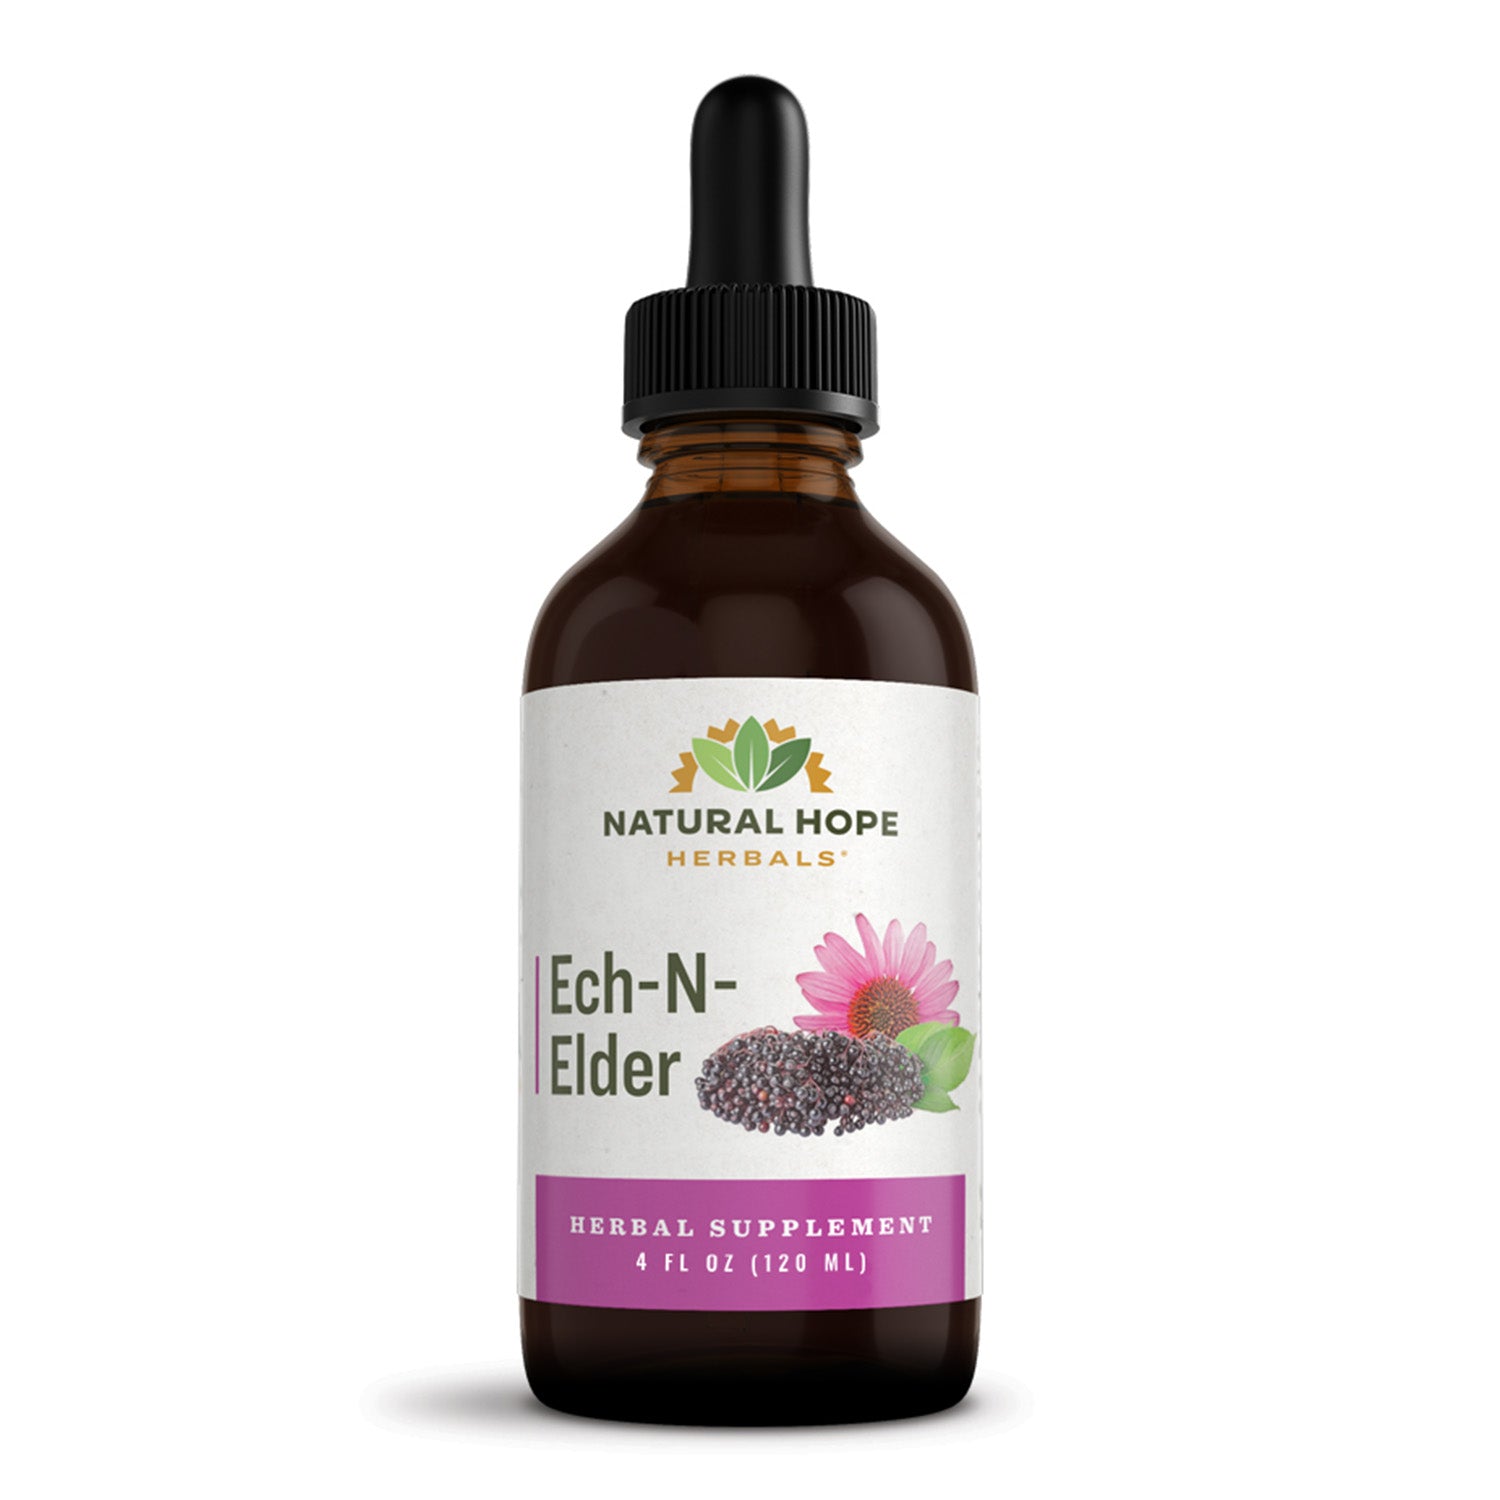 Ech-N-Elder (Tincture) - Natural Hope Herbals